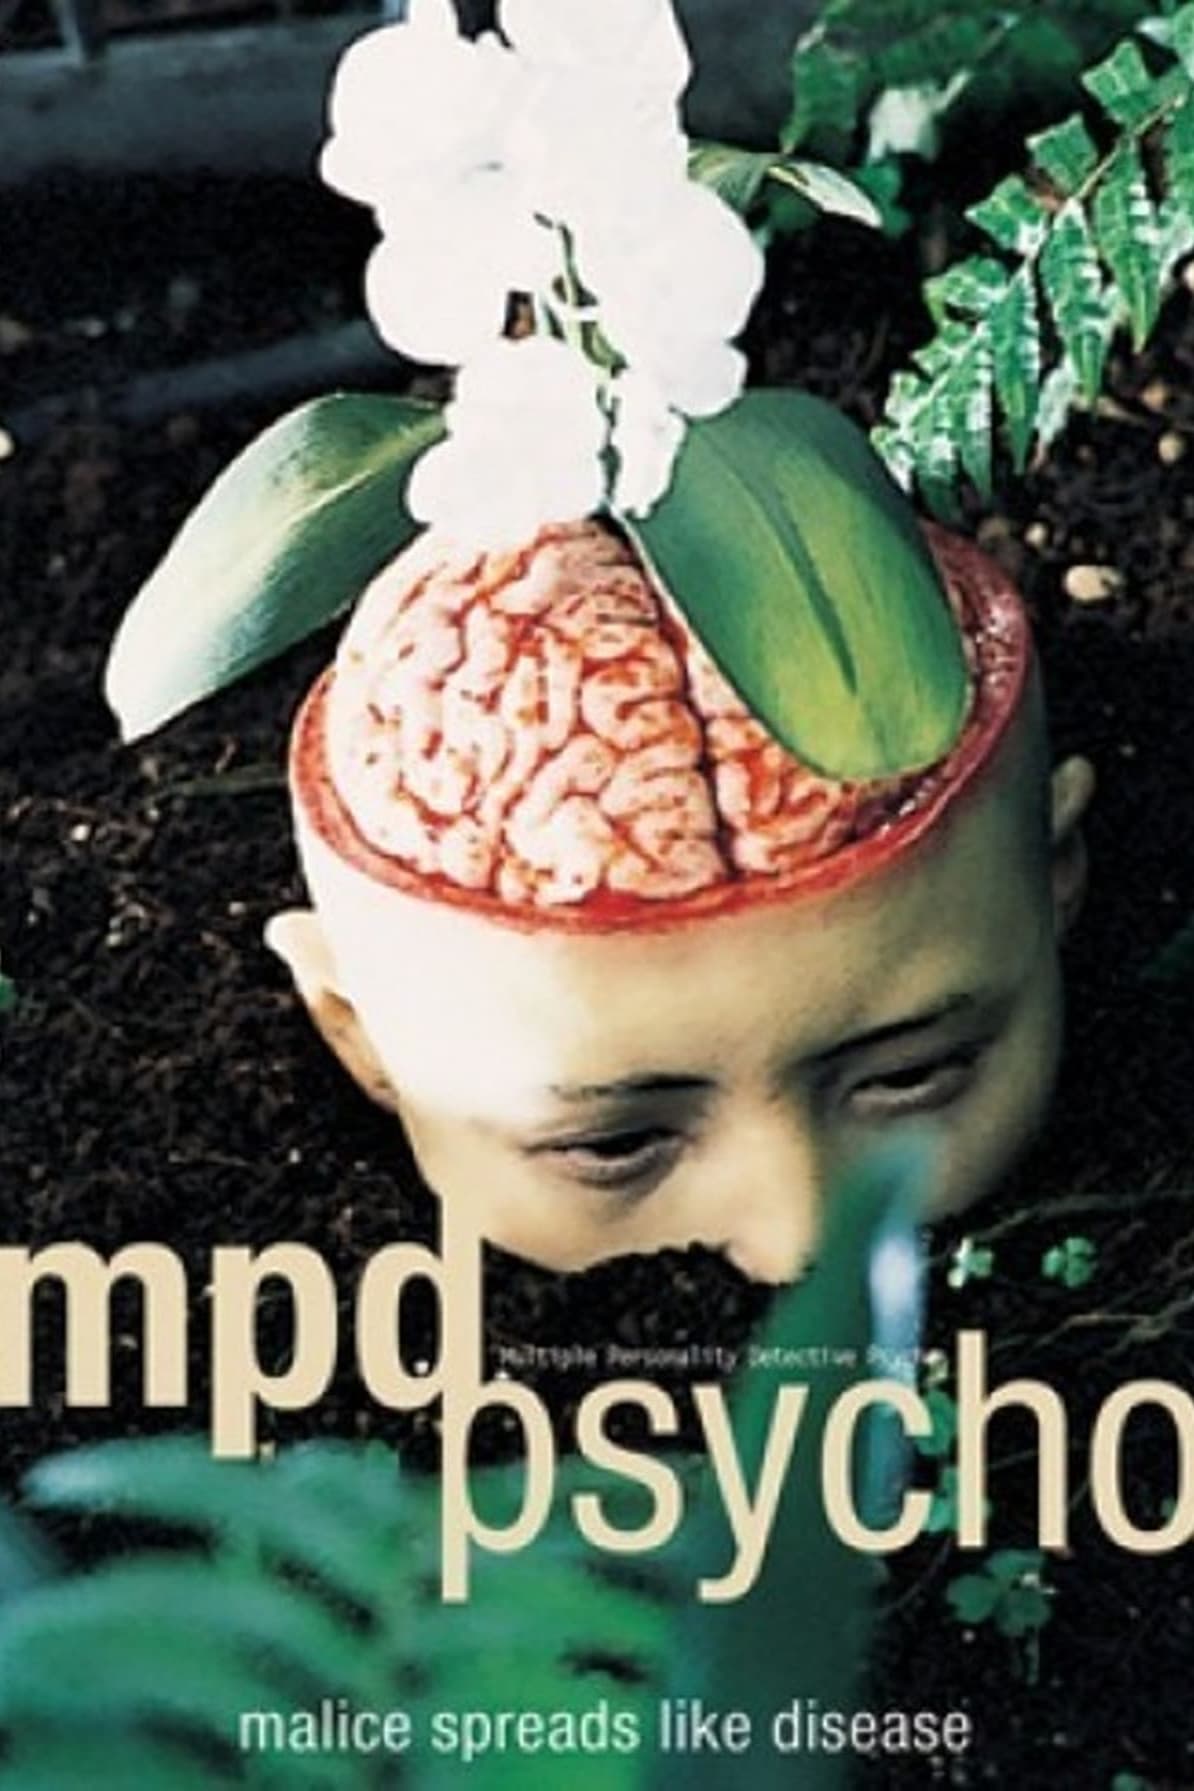 MPD Psycho (2000)